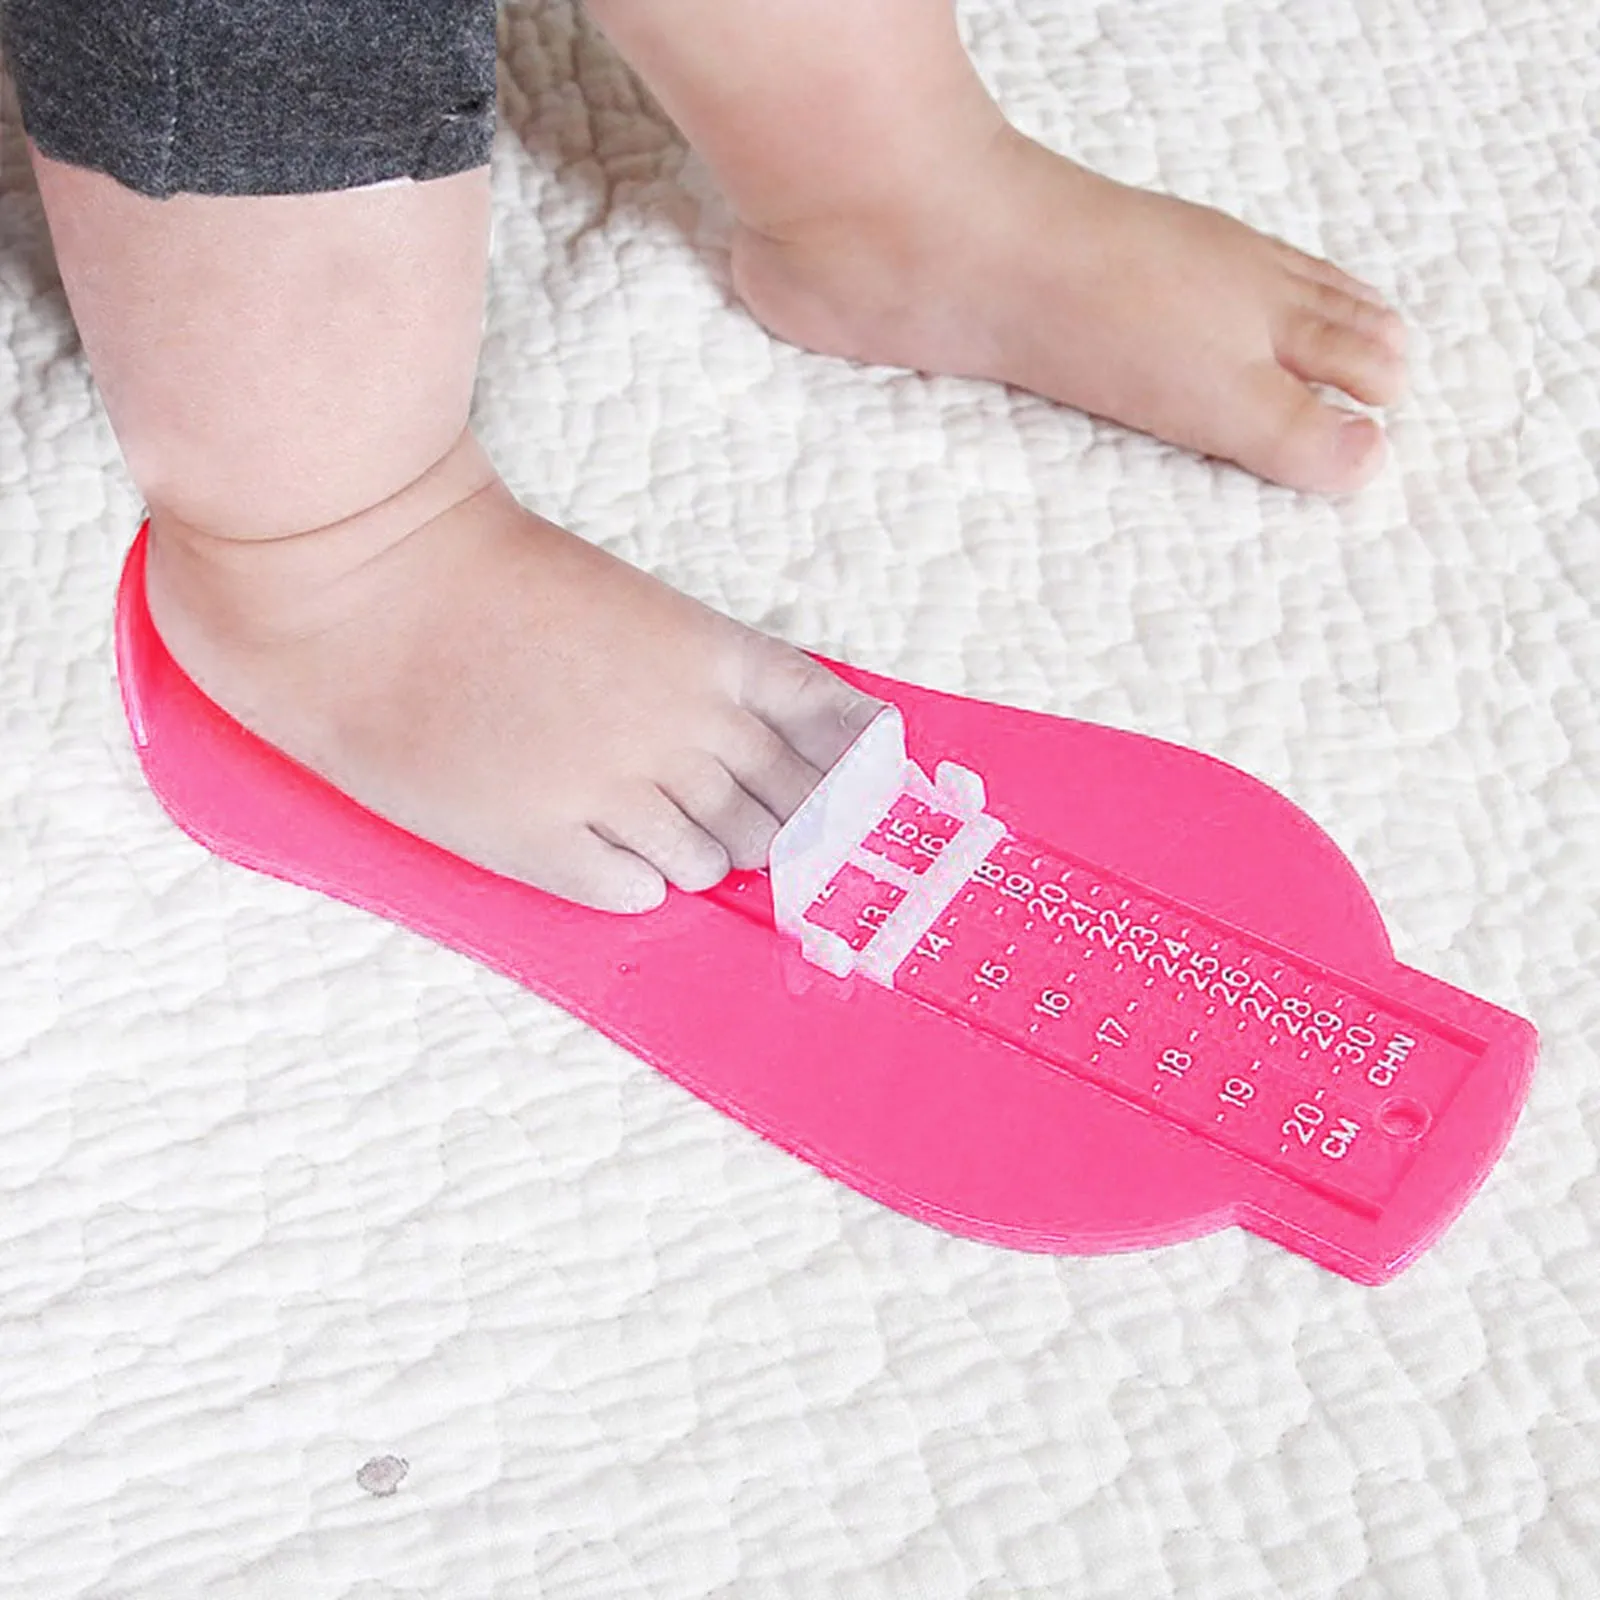 Vkospy Infant Foot Measure Gauge Shoes Size Measuring Ruler Tool Baby Kids Shoe Toddler Shoes Fittings Gauge foot measure 